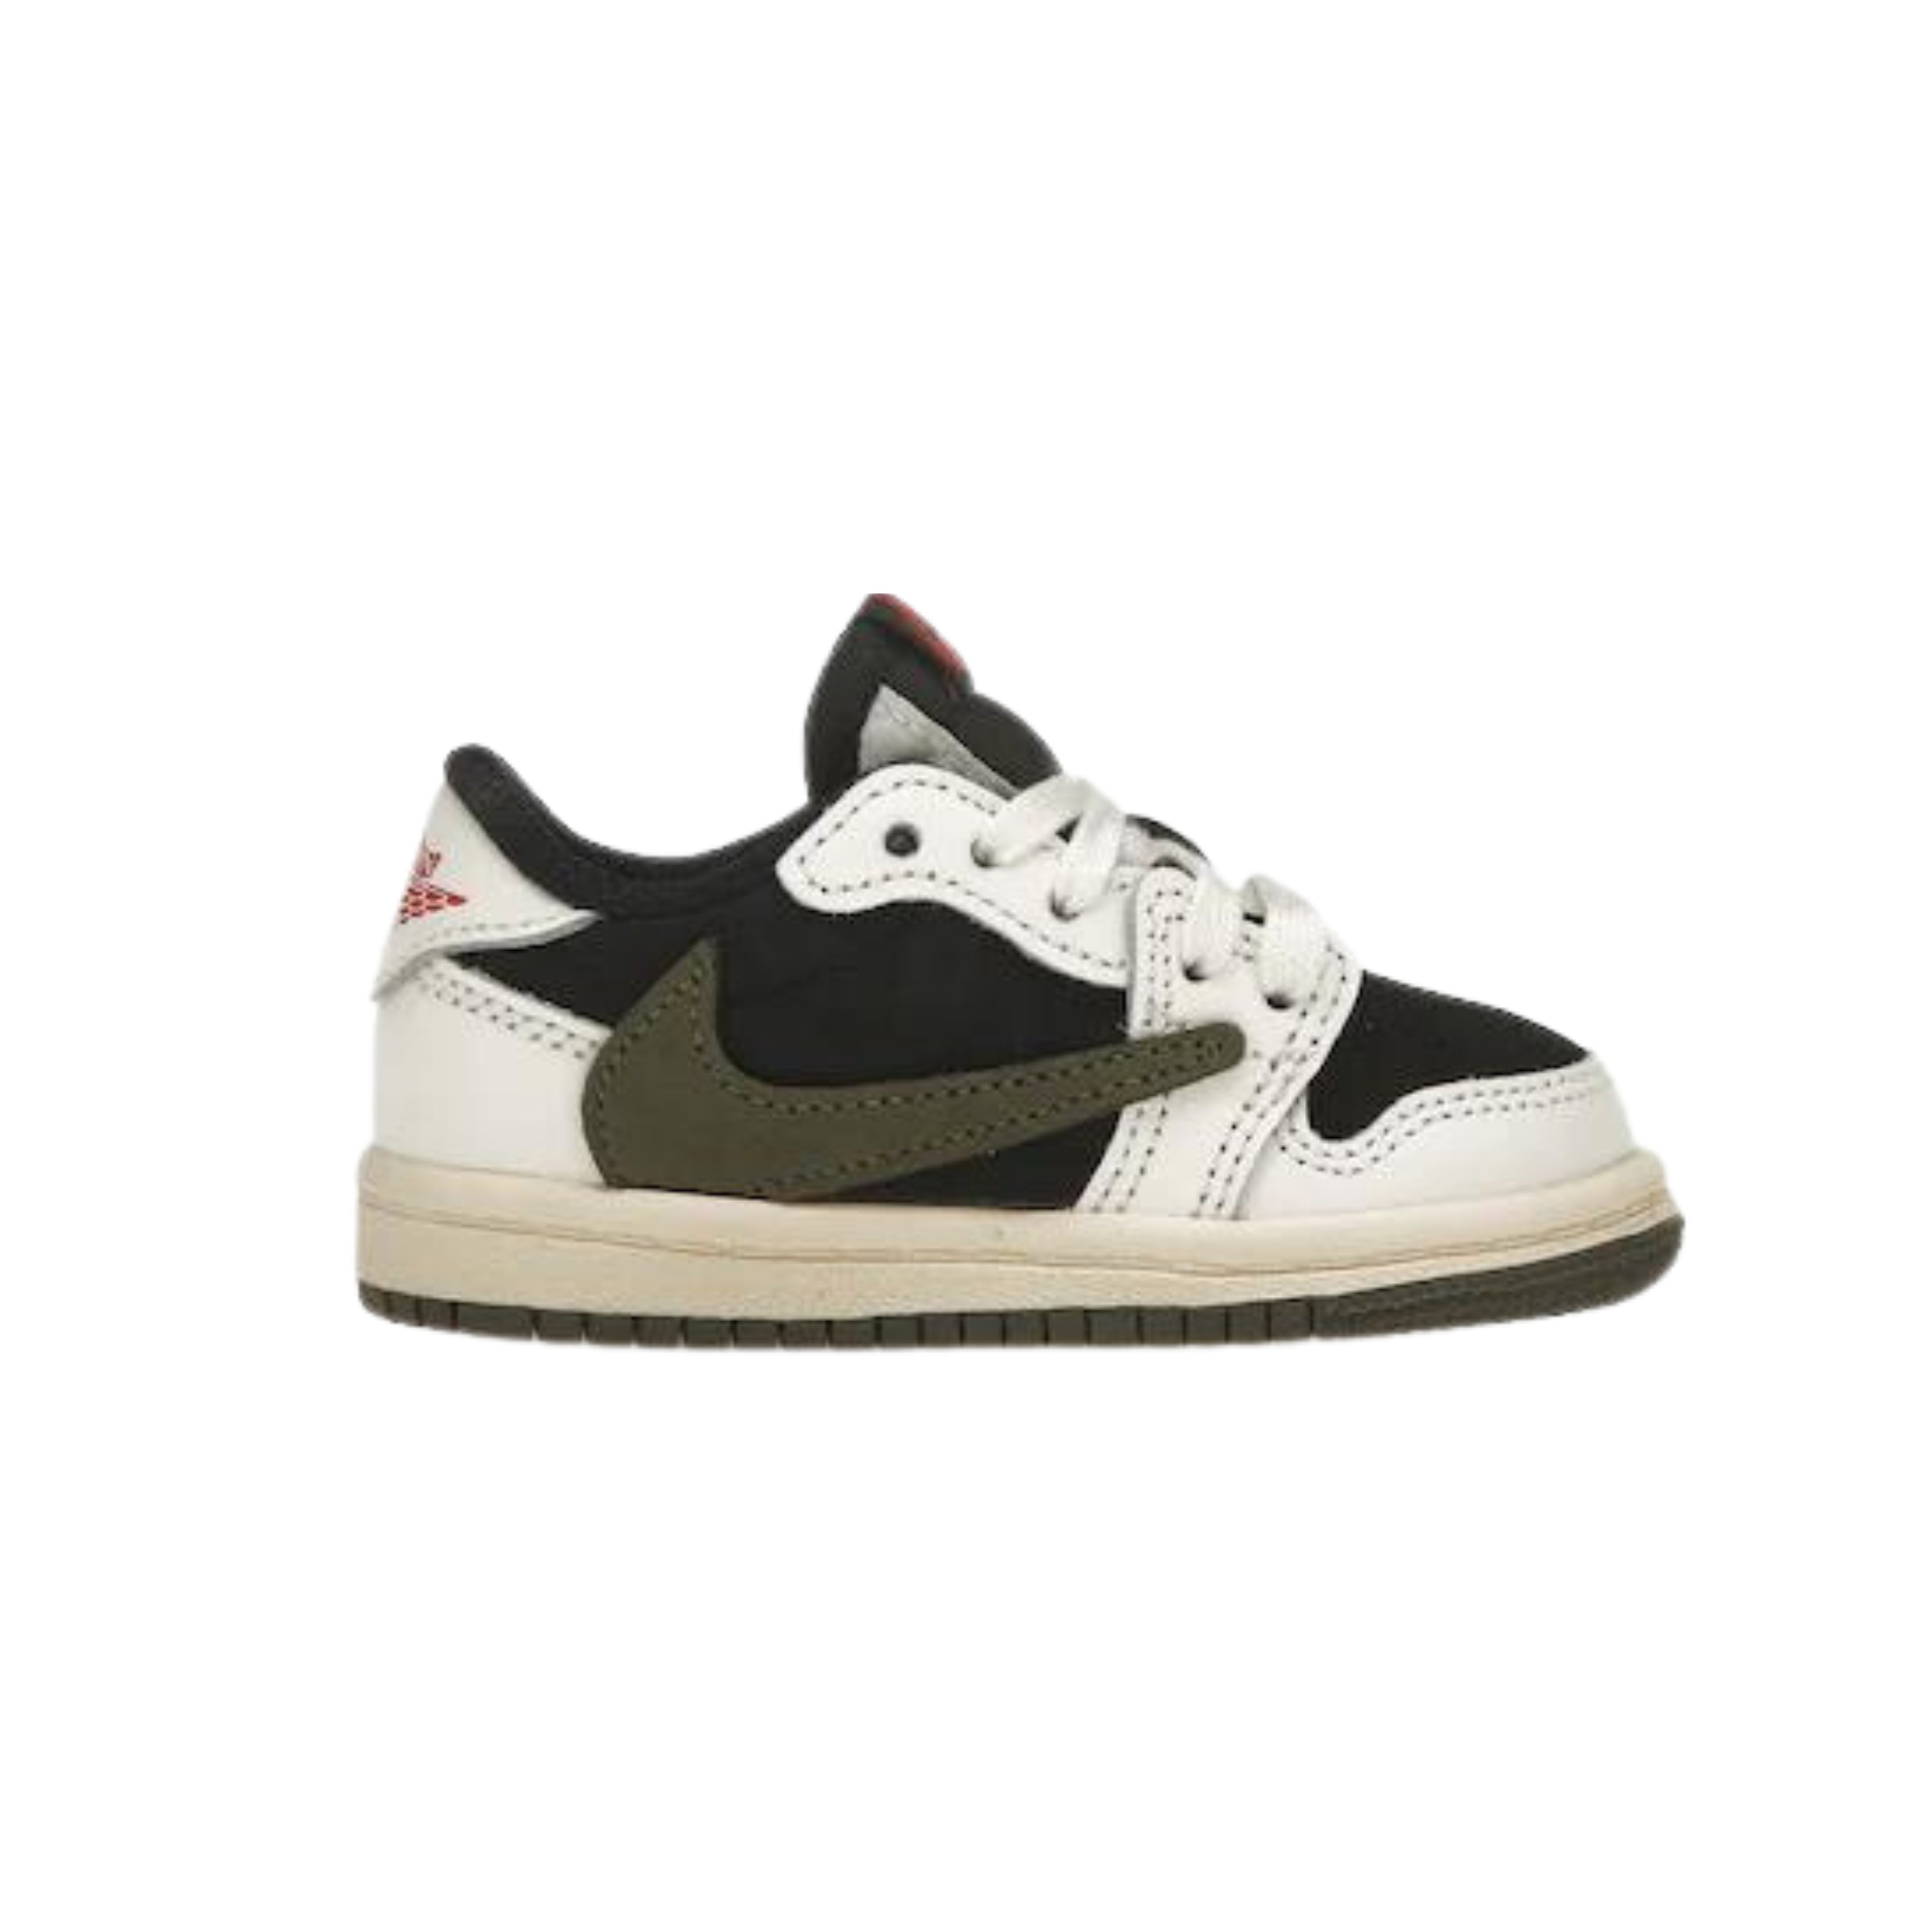 Air Jordan IV 'Black Cat' Release Date. Nike SNKRS IE